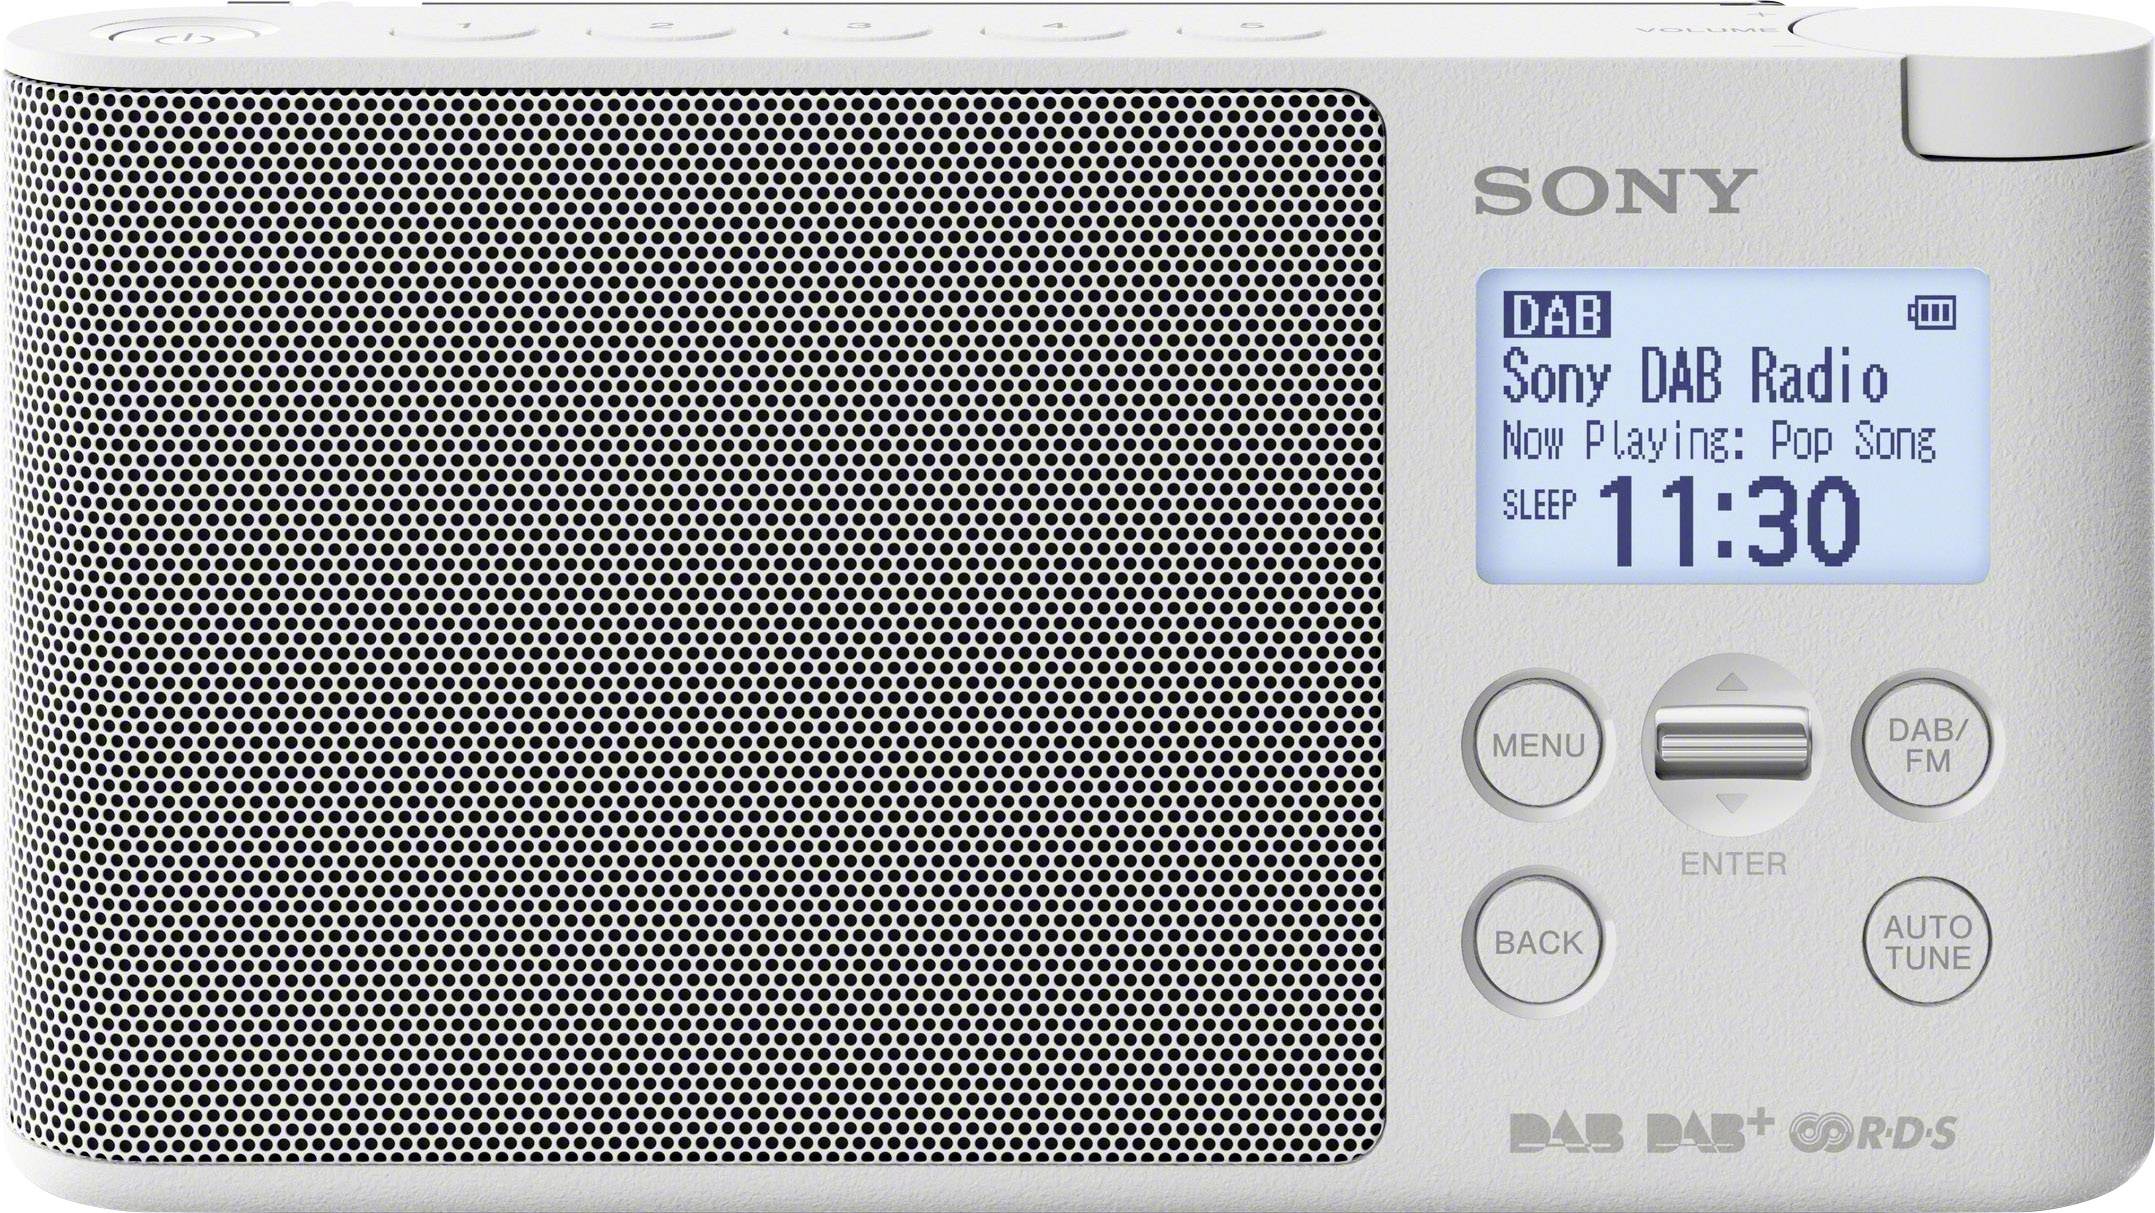 aardappel Dubbelzinnig Verdorie Sony XDR-S41D Desk radio DAB+, DAB, FM White | Conrad.com